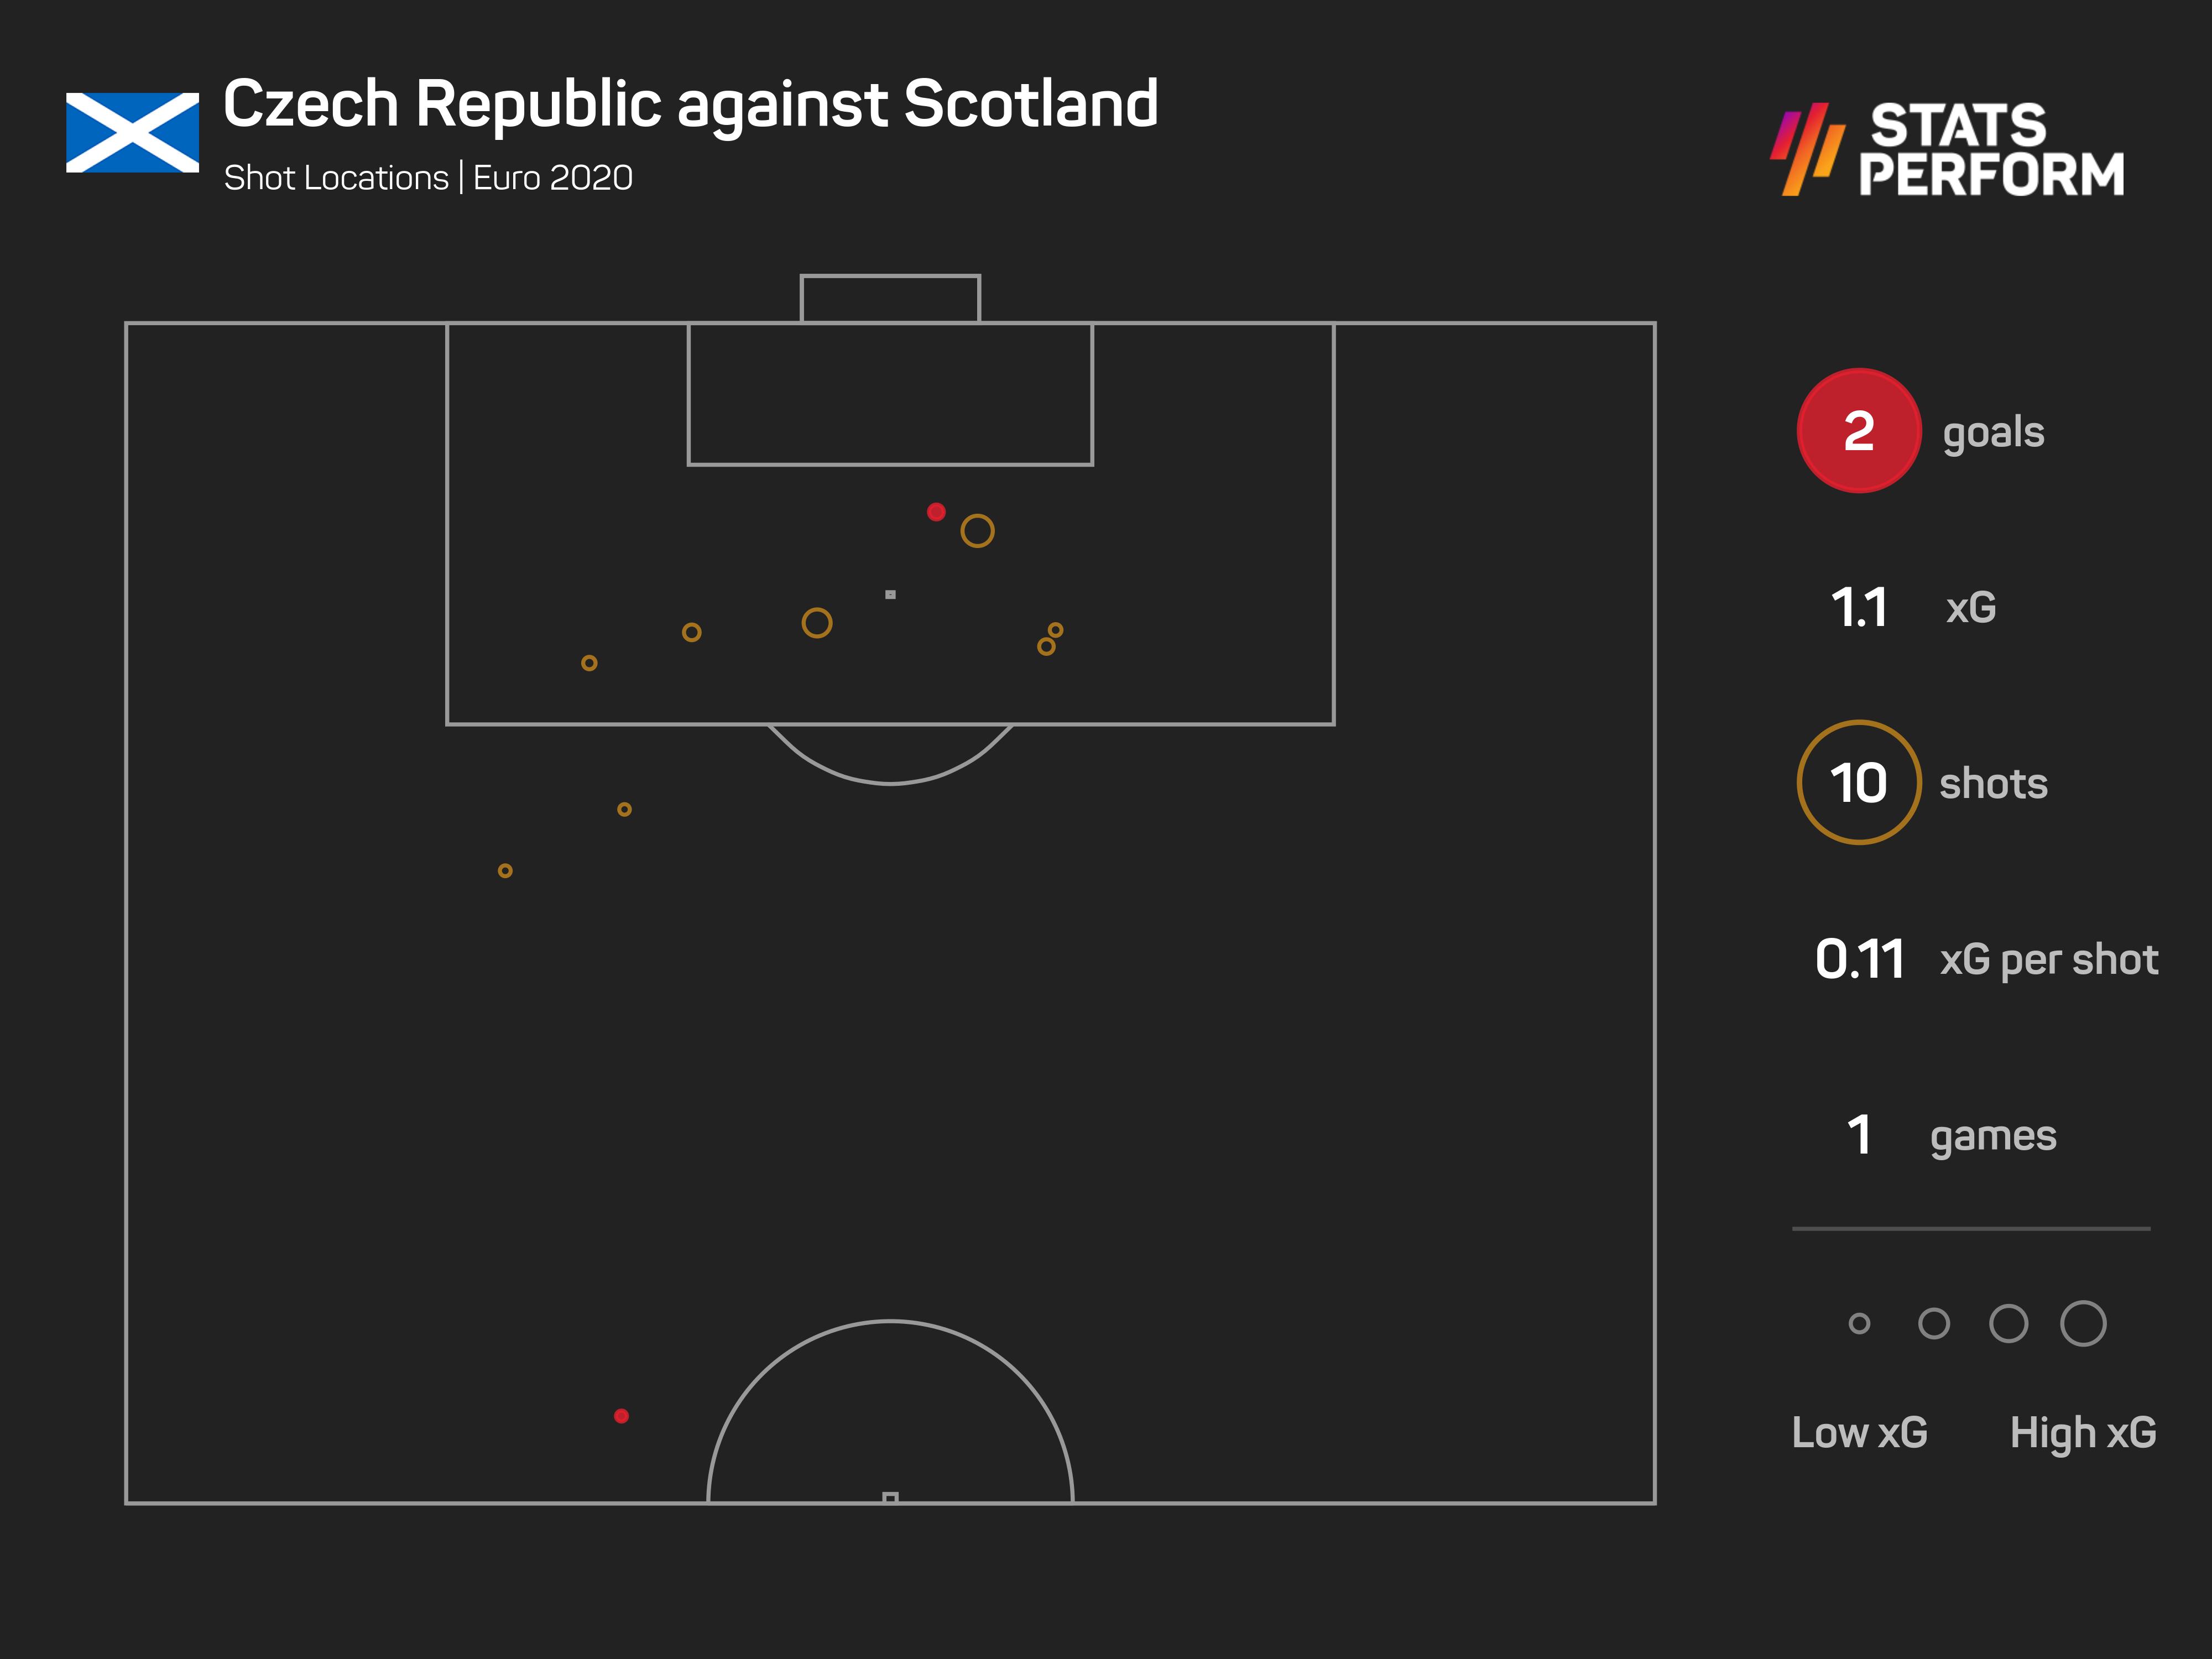 Scotland 0-2 Czech Republic: Expected goals against